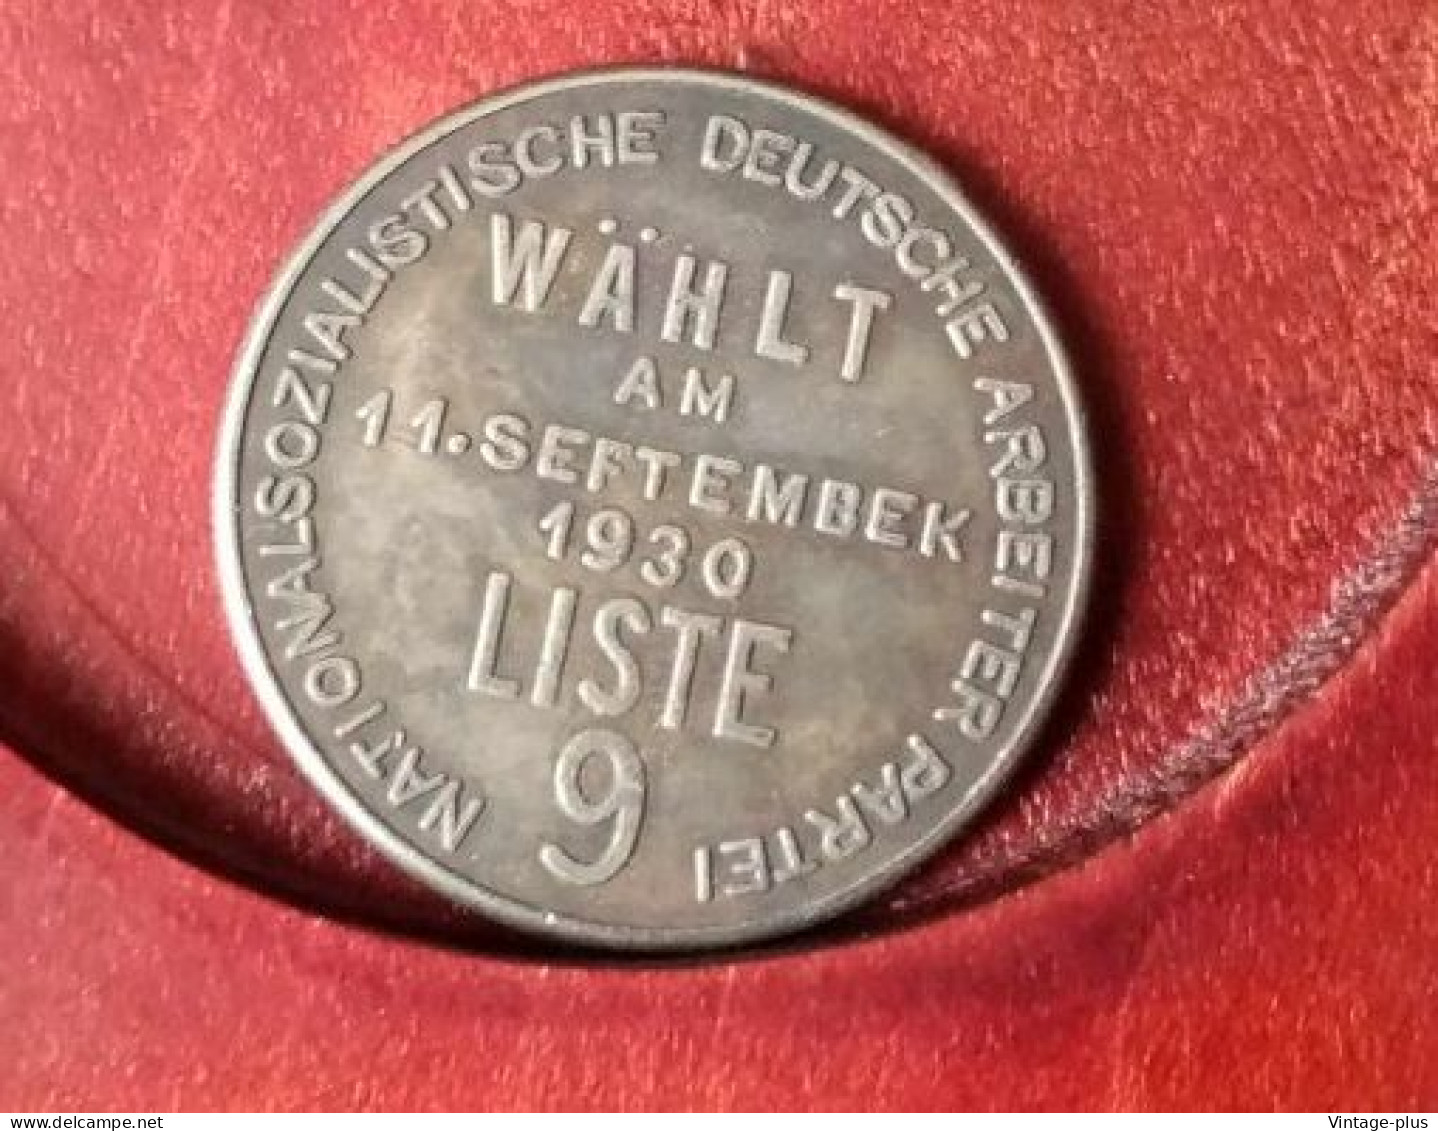 GERMANIA 3° REICH MONETA COMMEMORATIVA WAHLT AM 11 STTEMBER 1930 LISTE 9 - ALLEMAGNE - DEUTSCHLAND - COD: GG10 - Autres & Non Classés